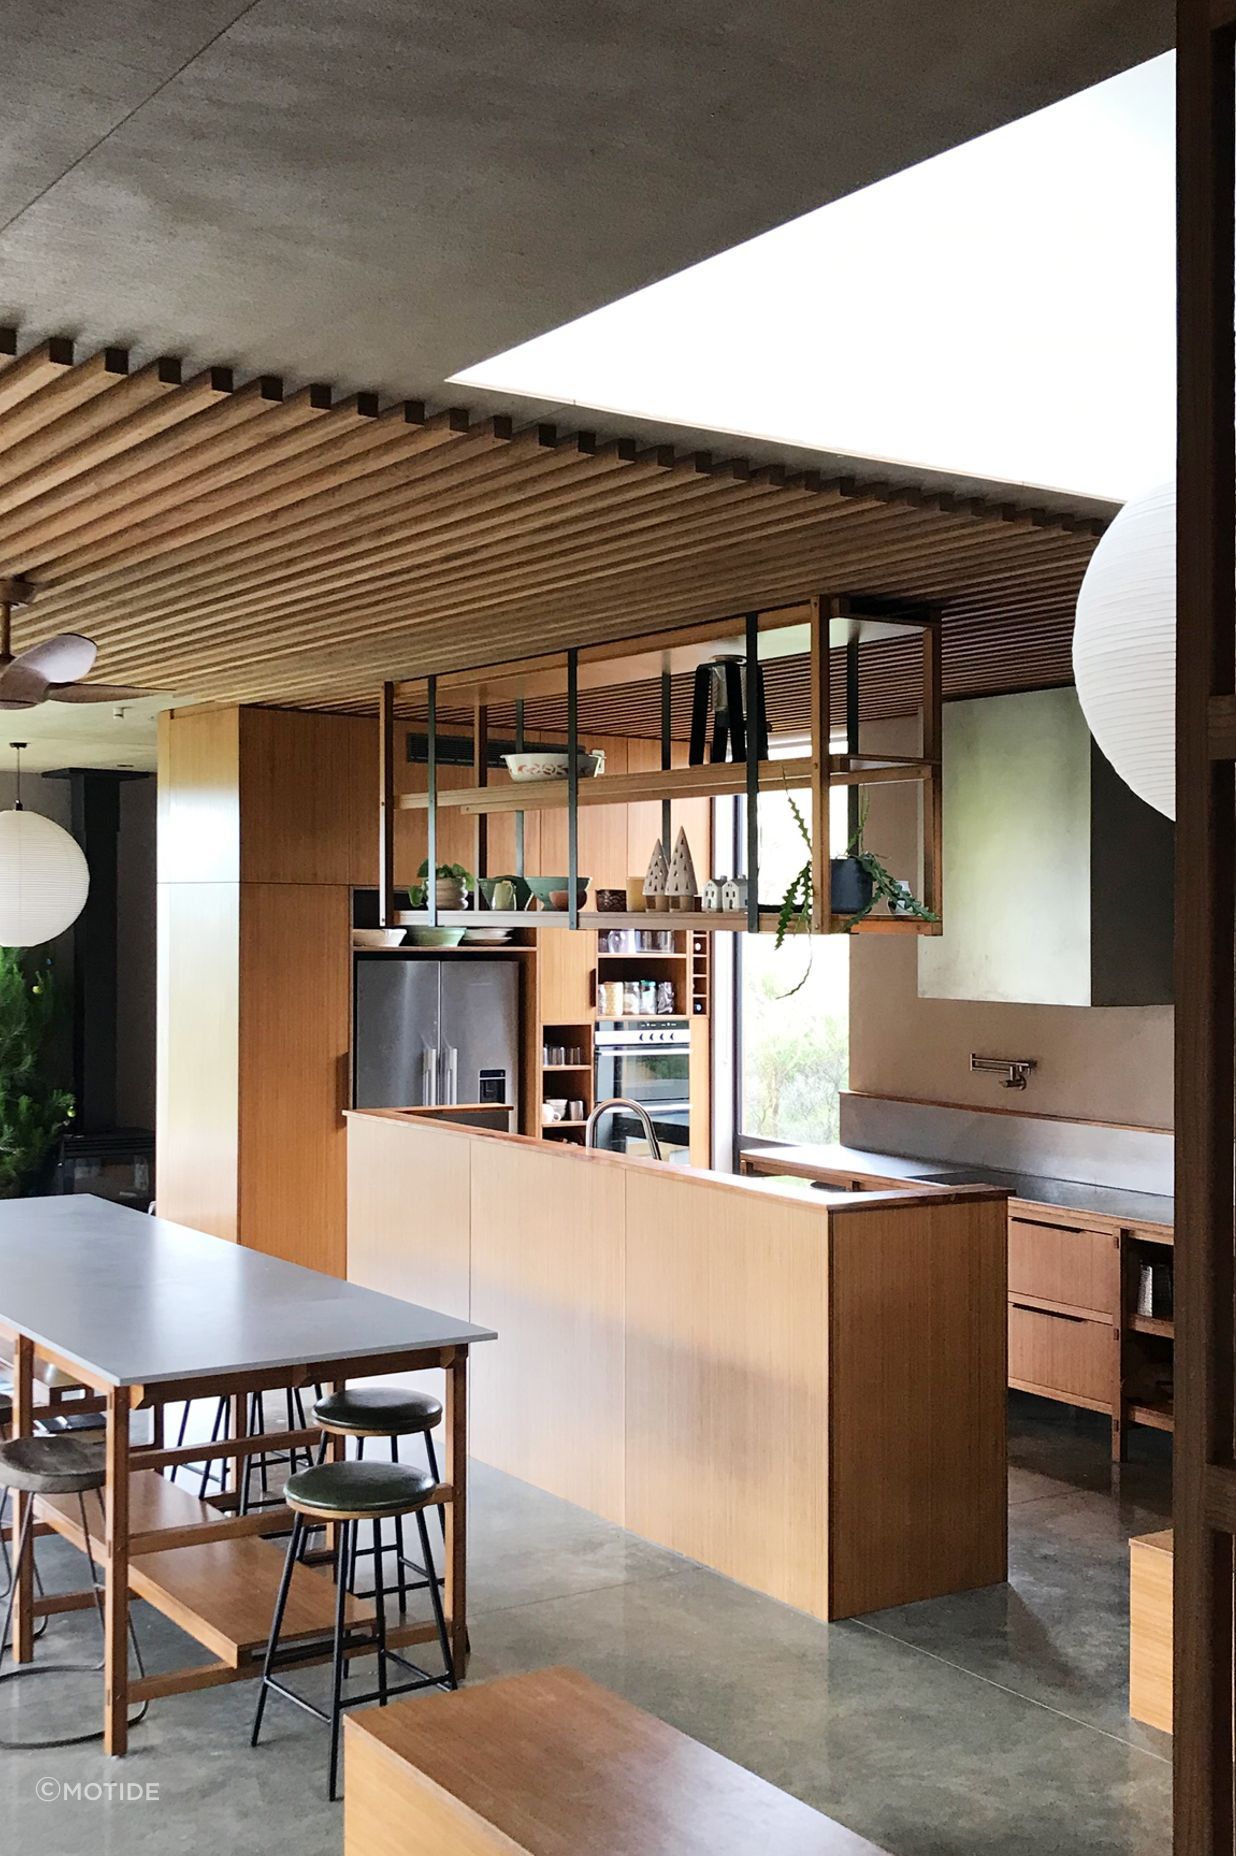 motide-bamboo-kitchen-sustainable-architecture-nz-2.jpg